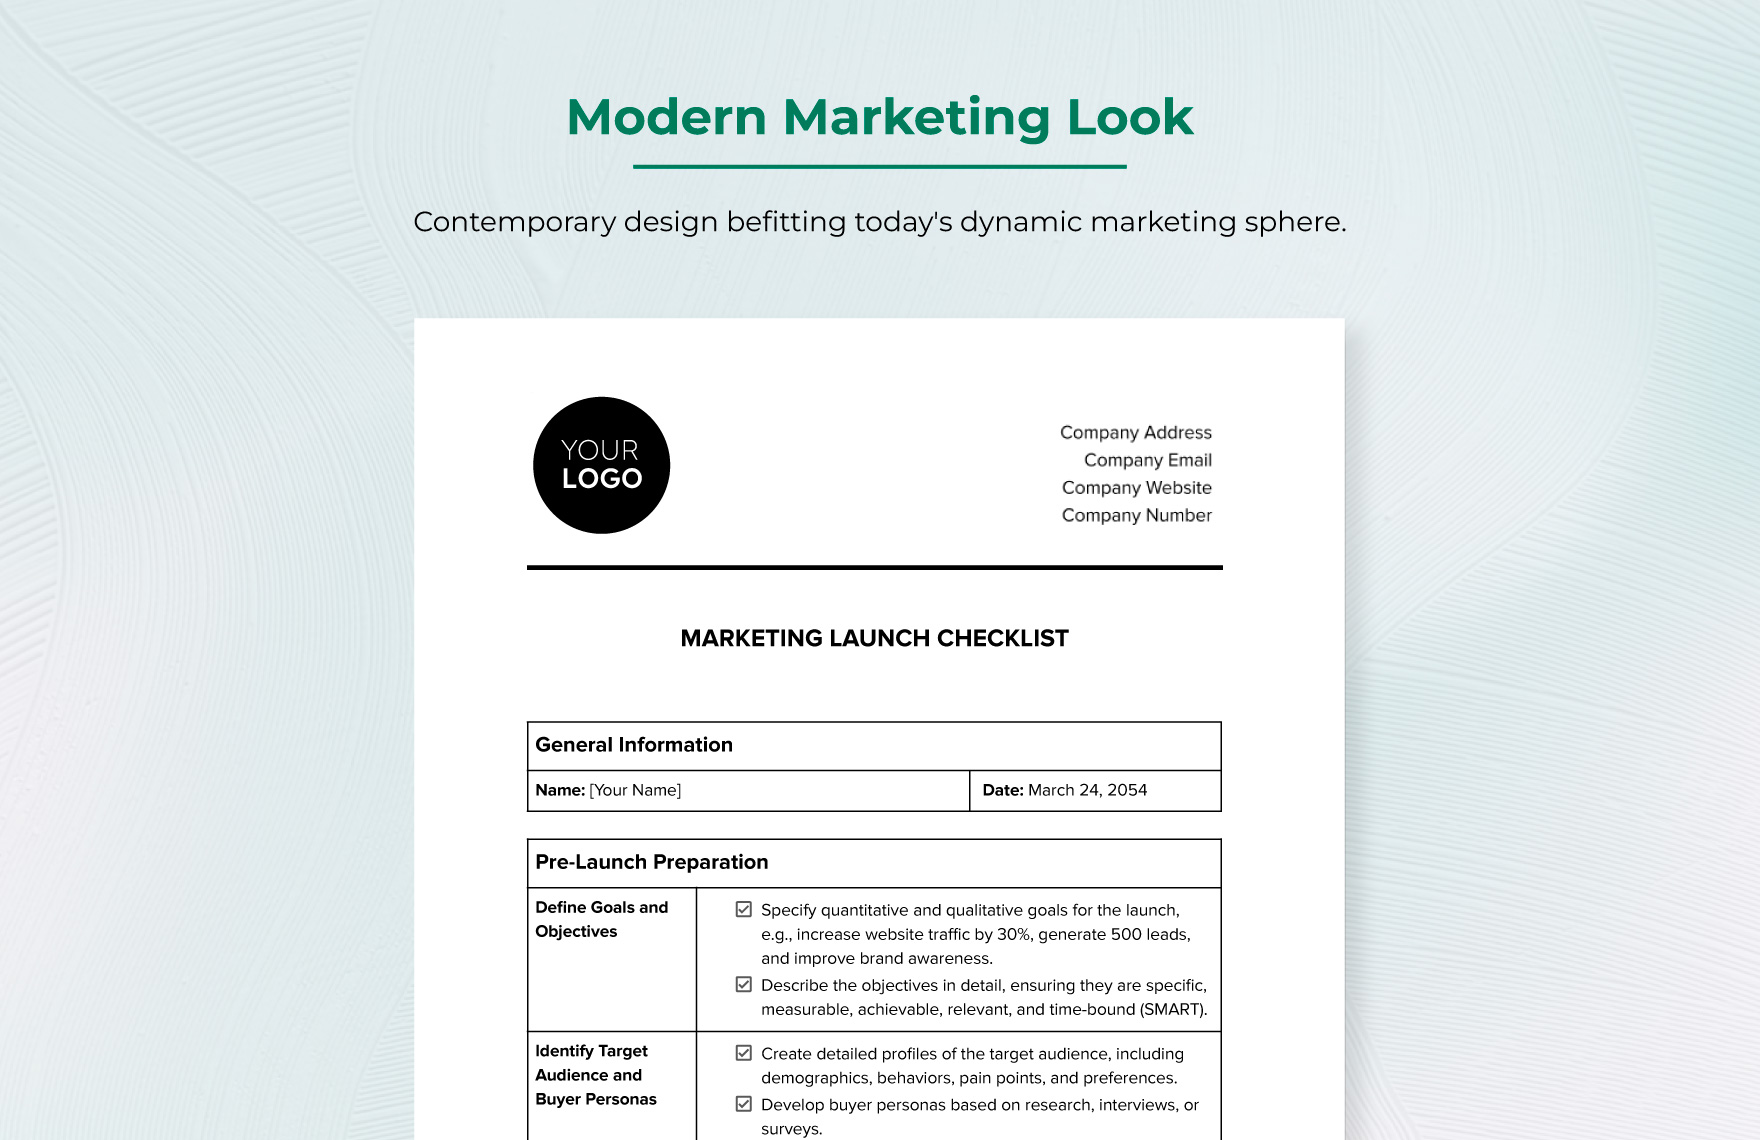 Marketing Launch Checklist Template